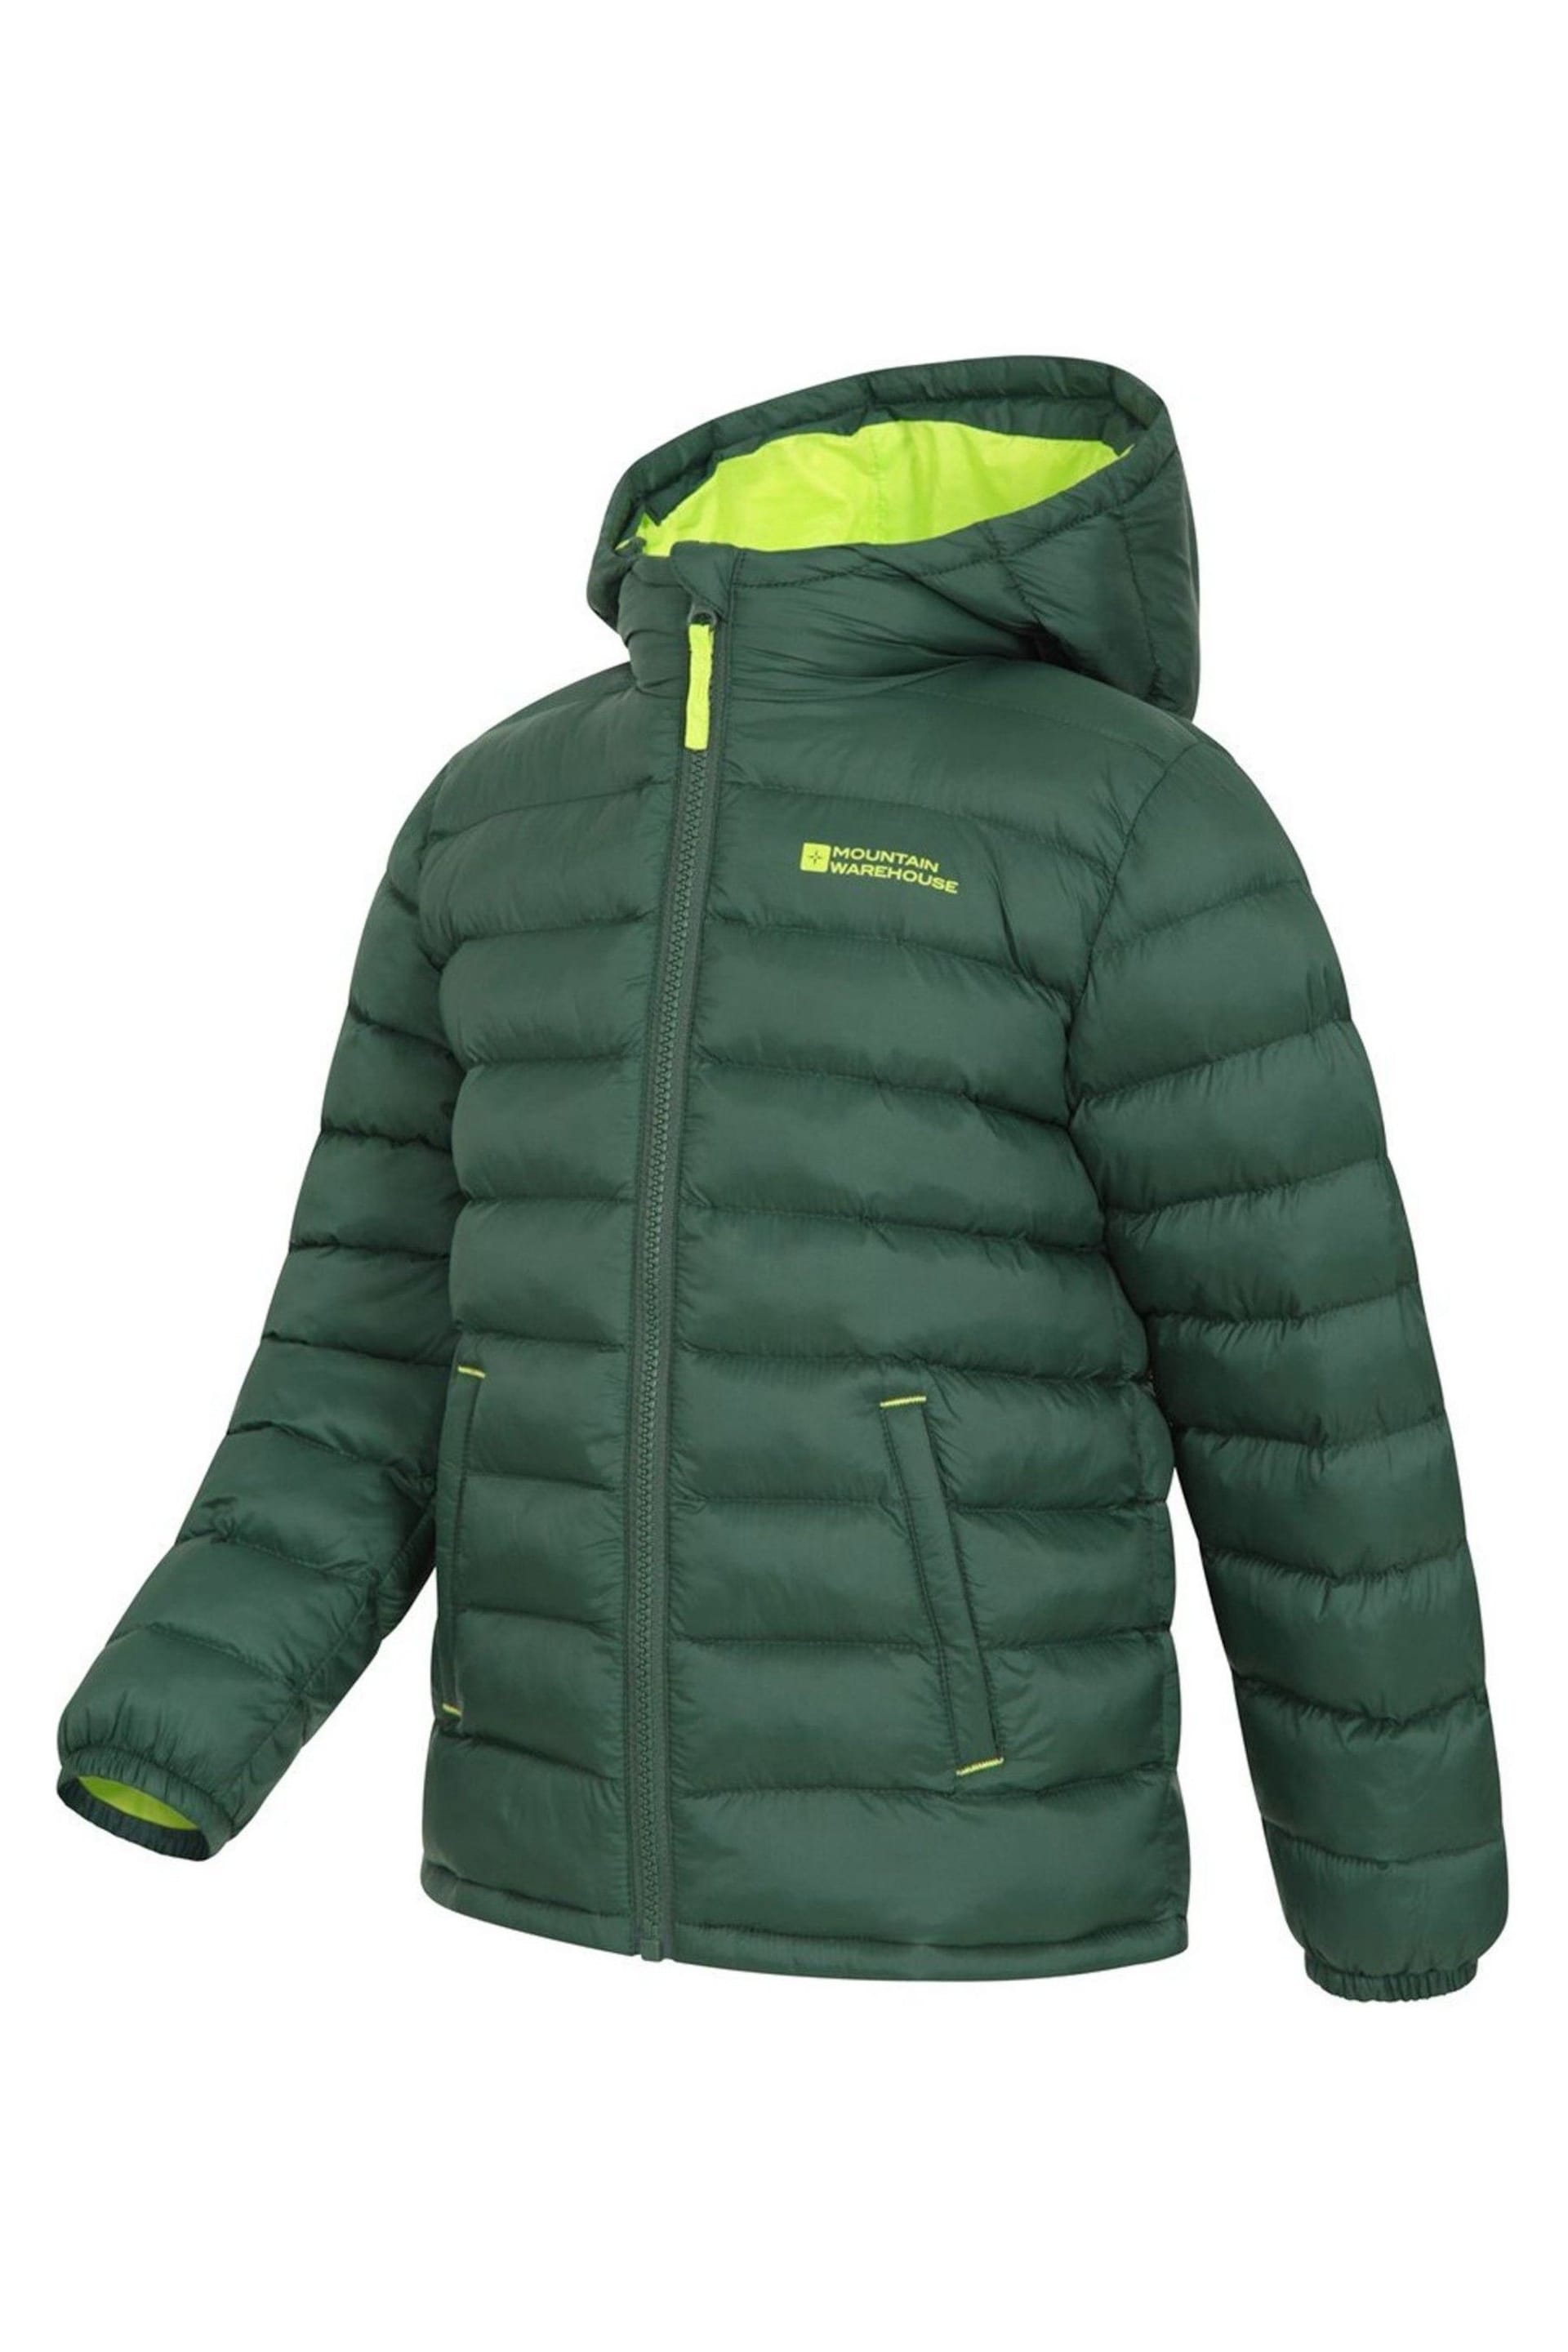 Mountain Warehouse Green Seasons Water Resistant Padded Jacket - Image 2 of 2